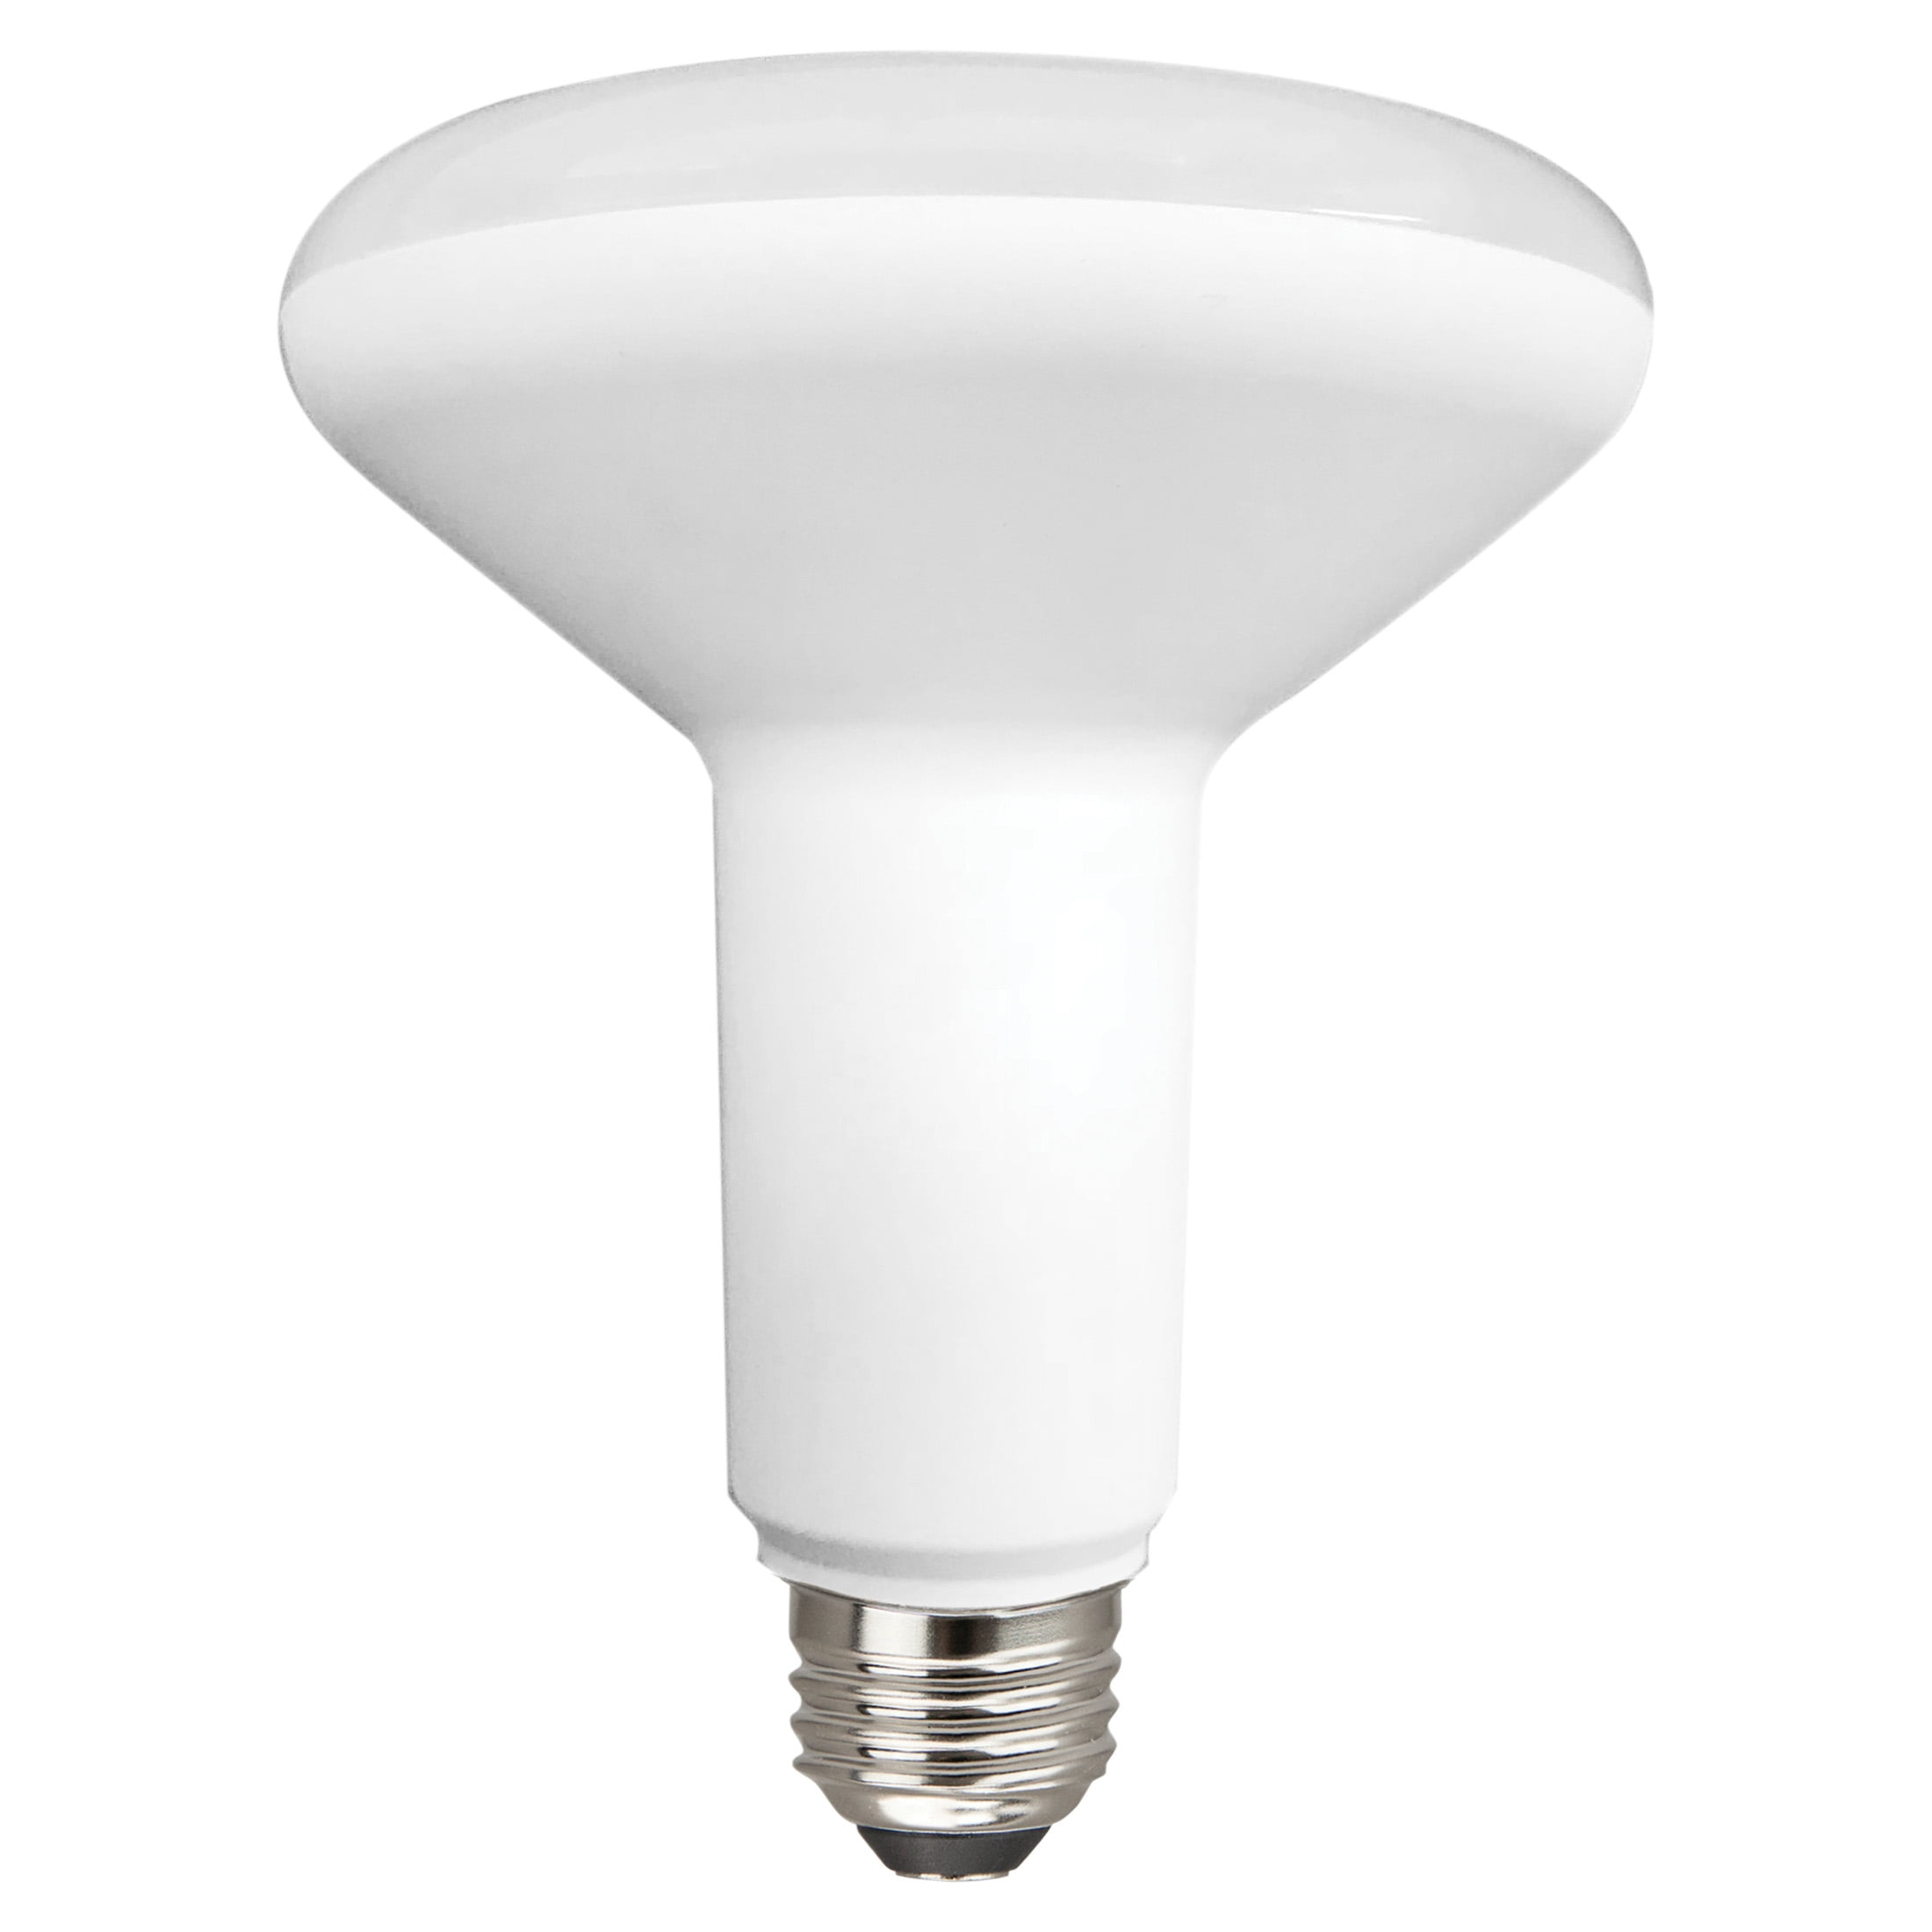 Great Value LED Light Bulb, 9W (65W Equivalent) BR30 Floodlight Lamp E26  Medium Base, Dimmable, Soft White, 4-Pack